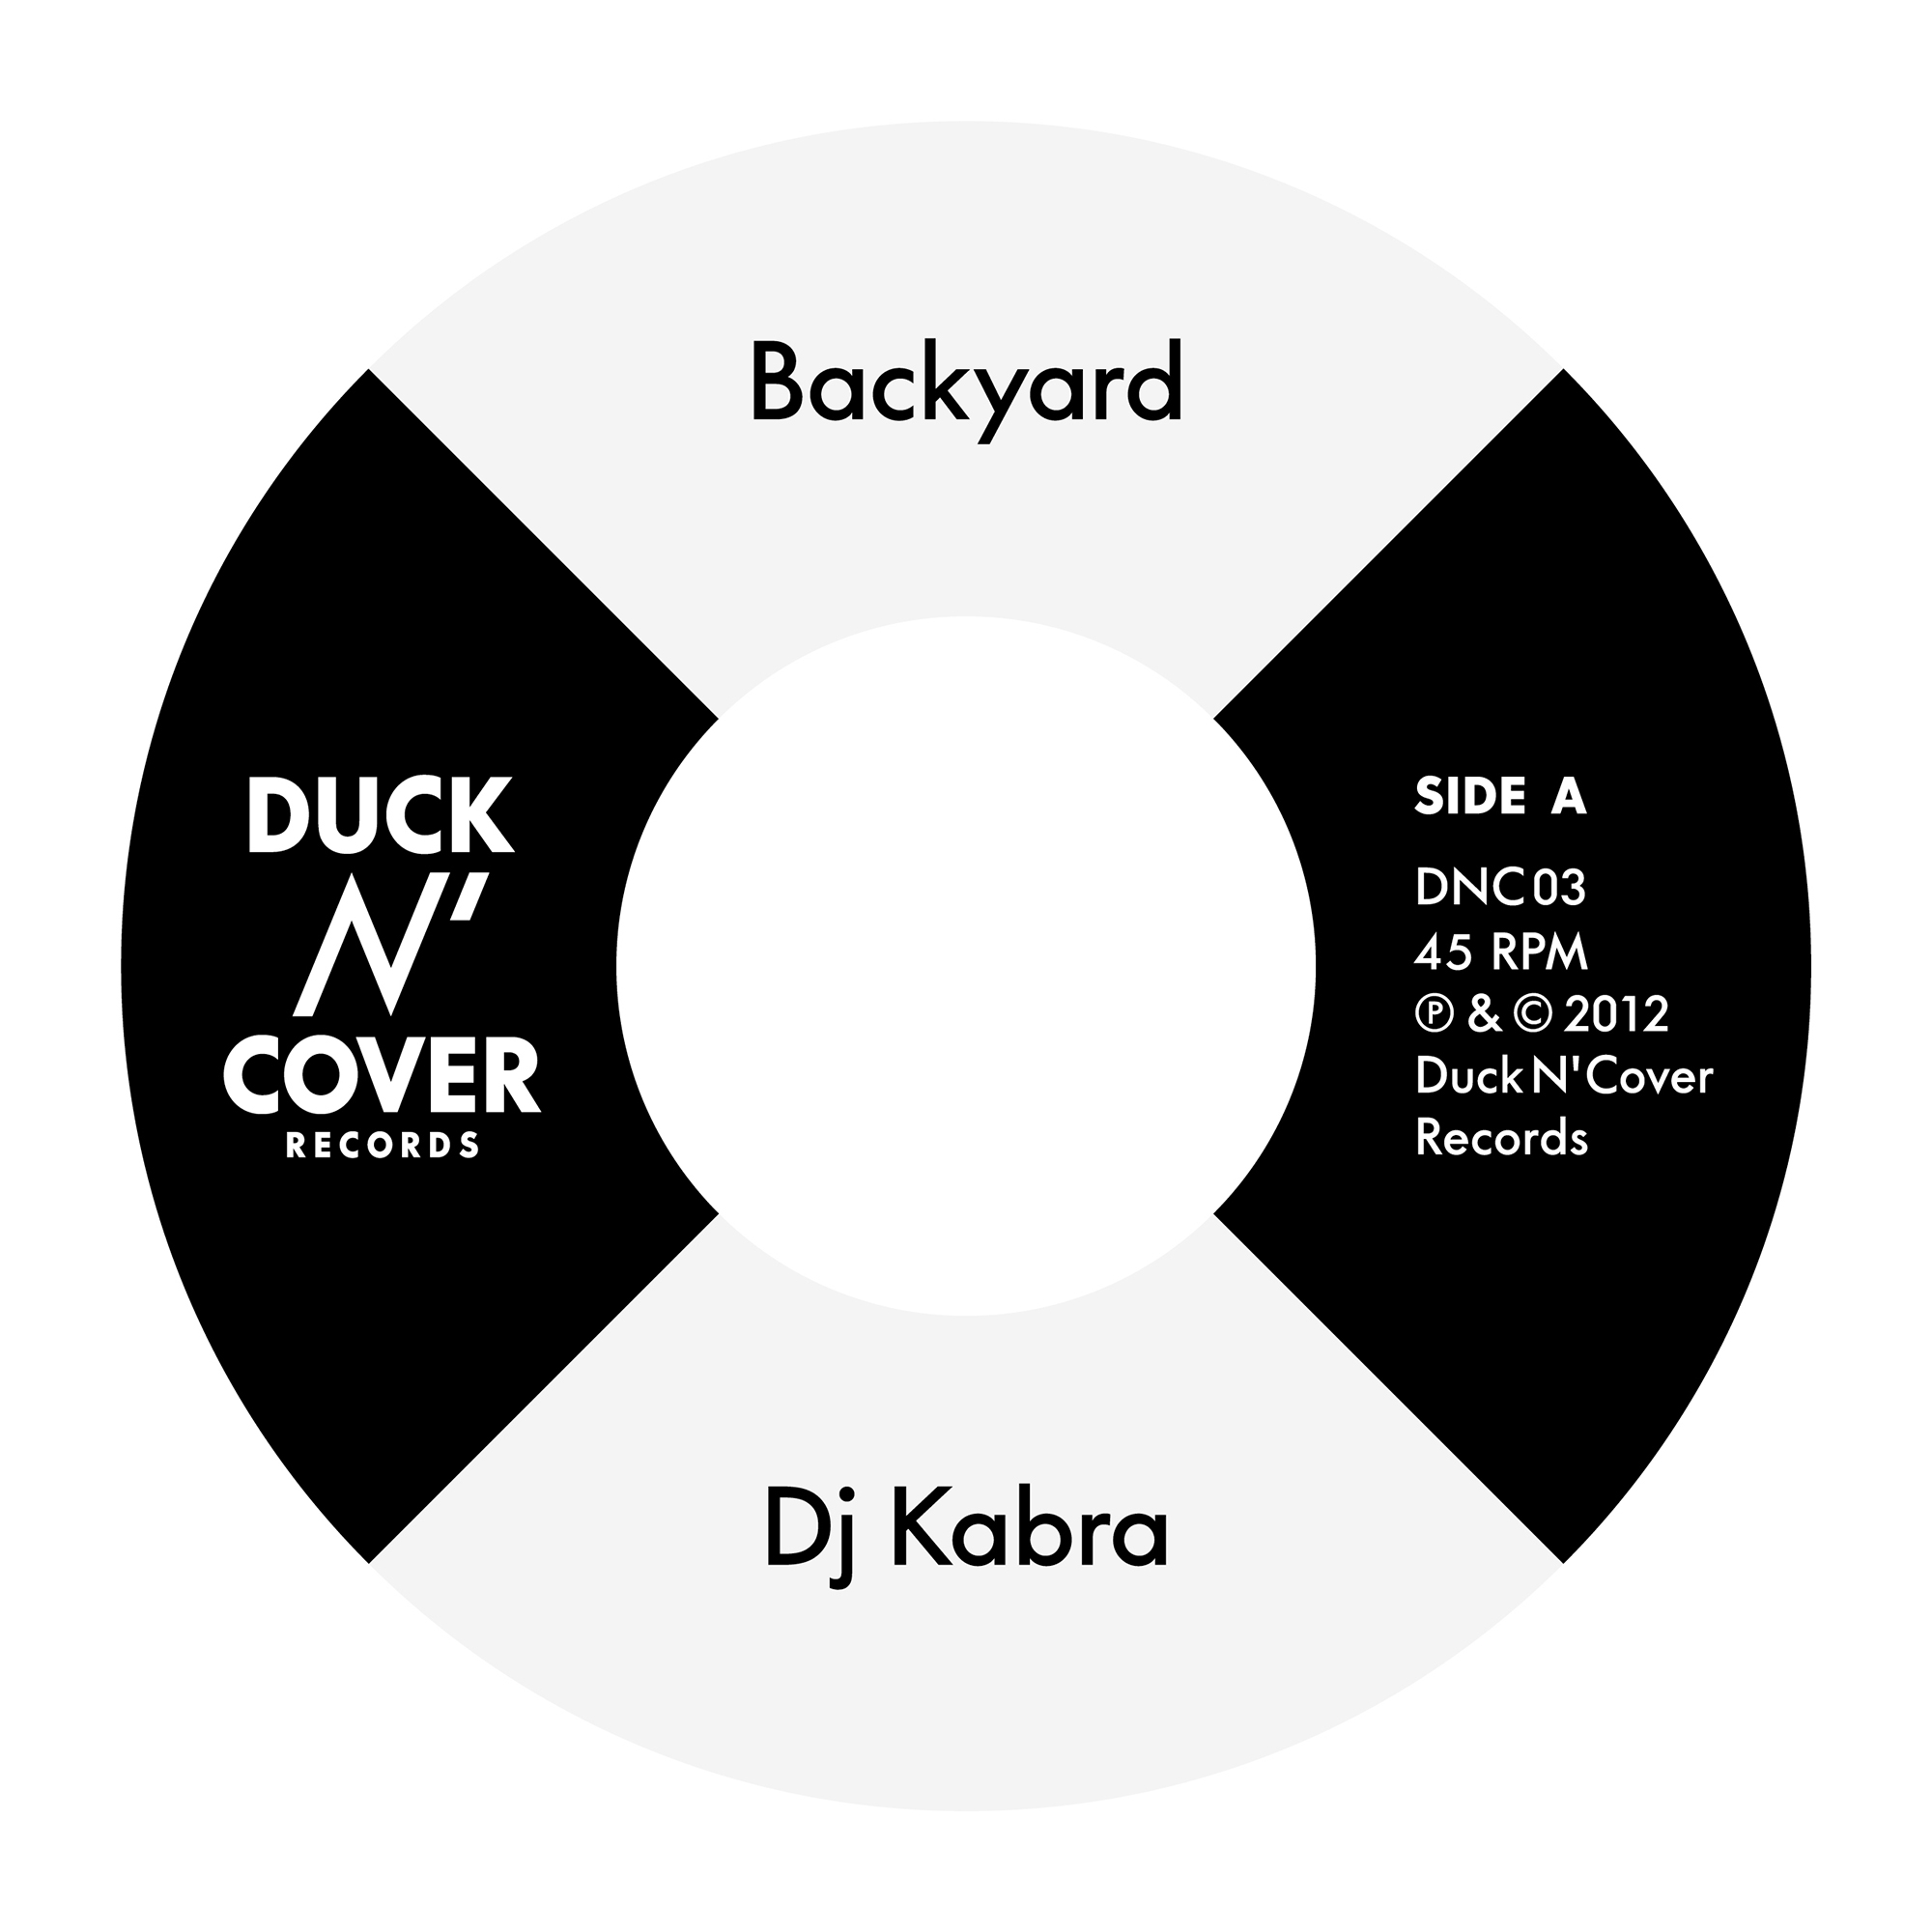 DNC03 / DJ KABRA / 7